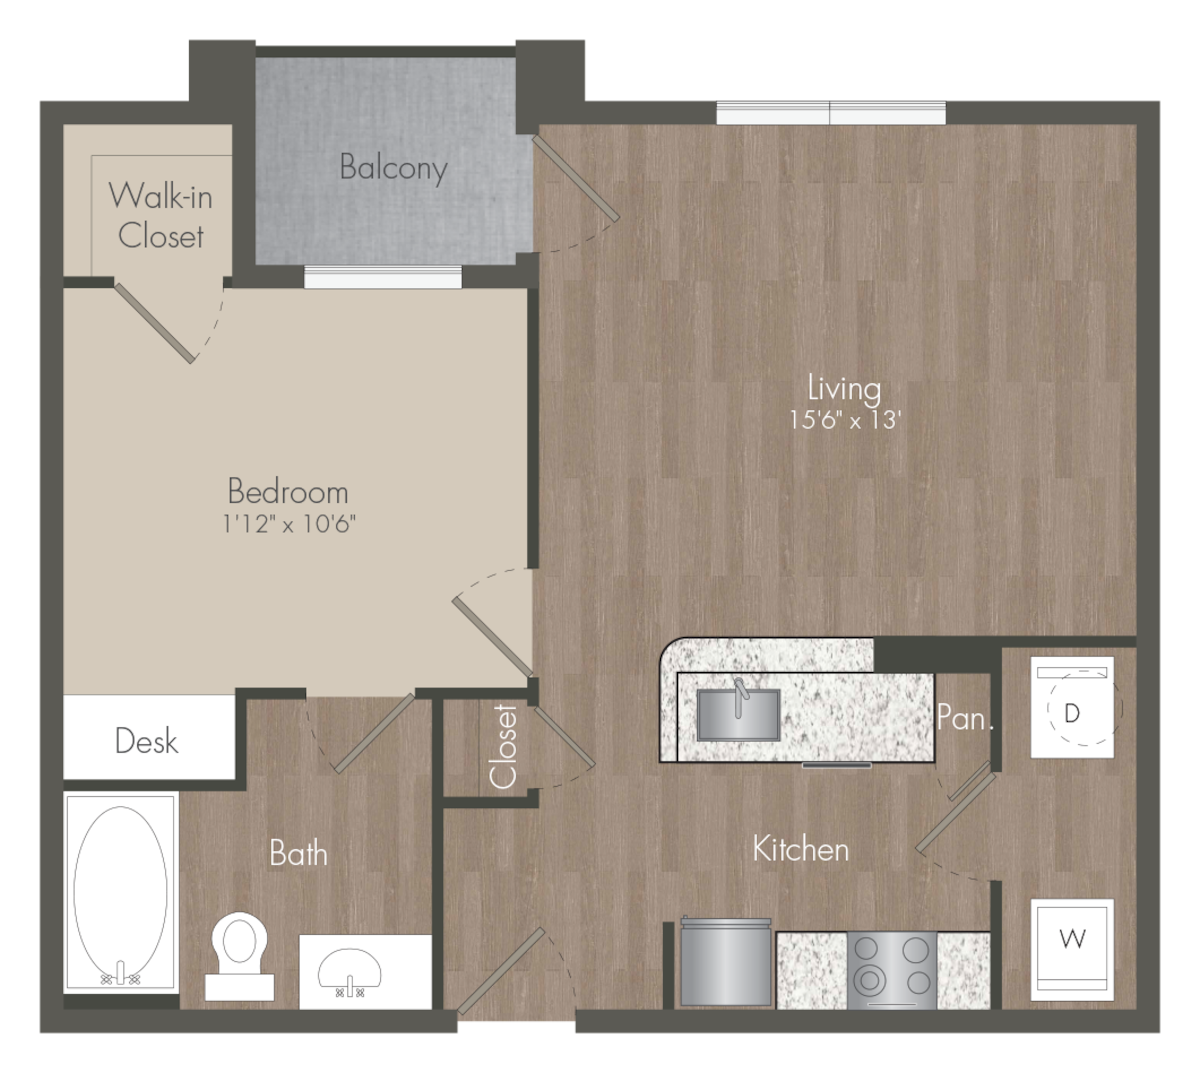 Floorplan diagram for A1 -1x1, showing 1 bedroom